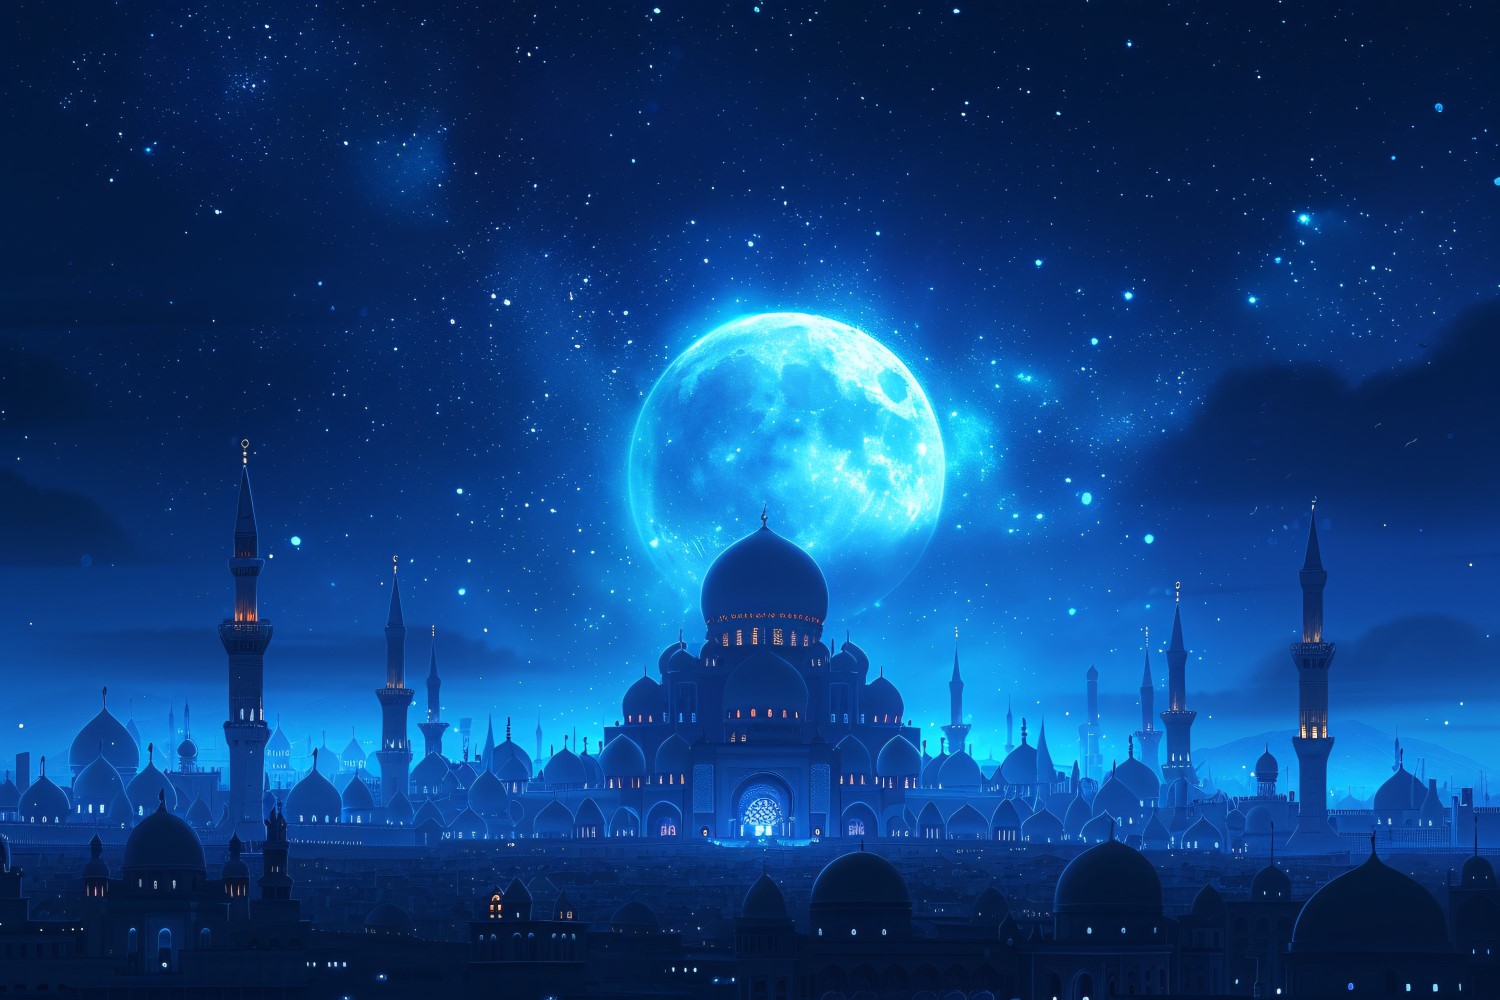 Ramadan Kareem greeting card banner design with moon & mosque